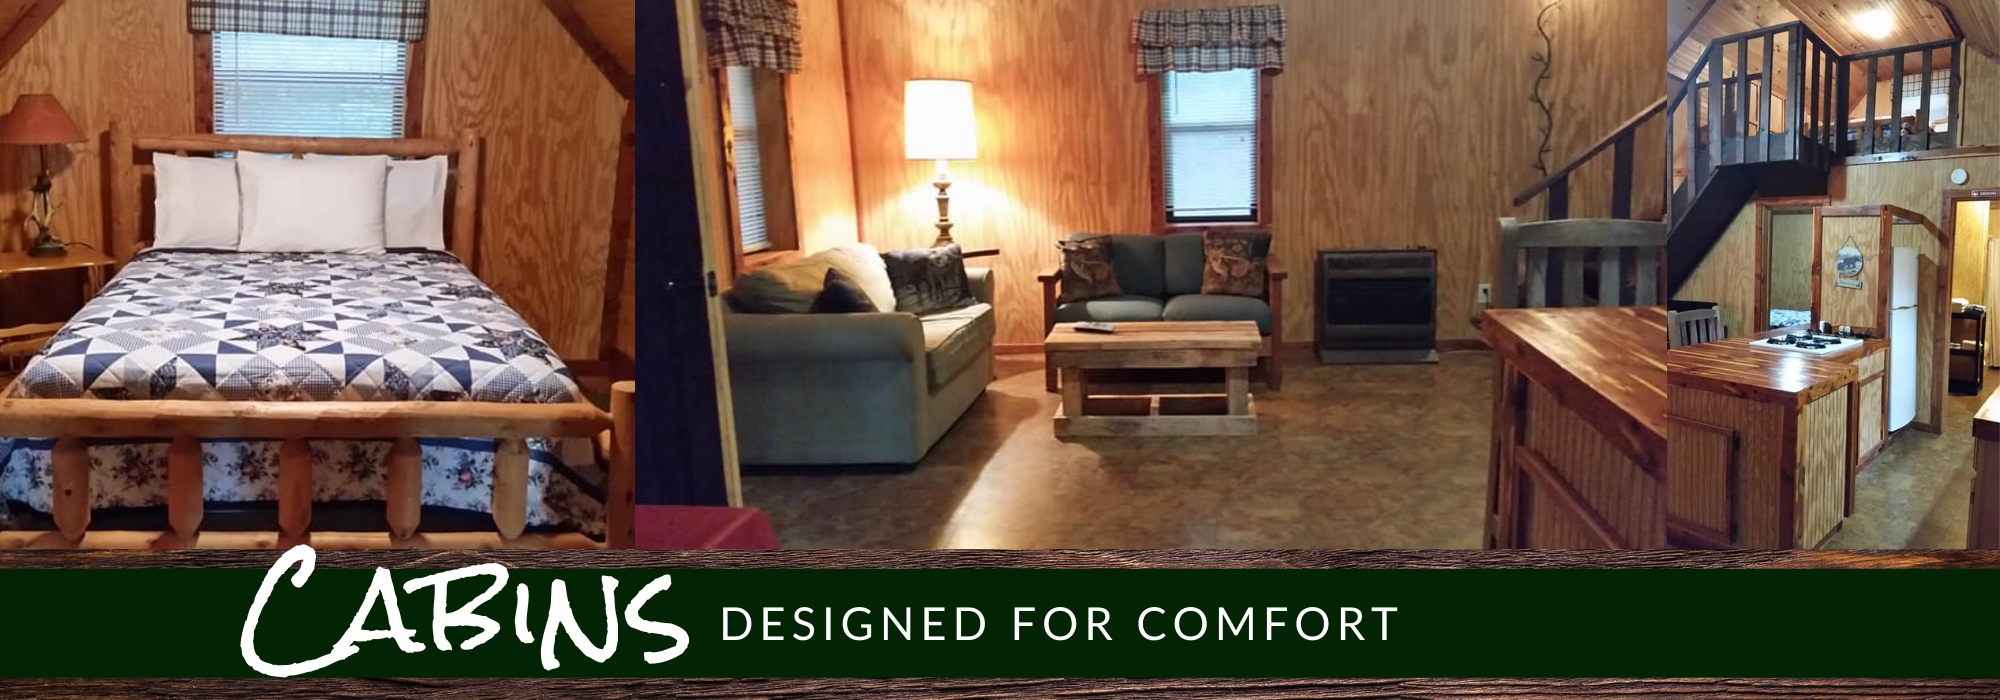 Cabins designed for comfort 